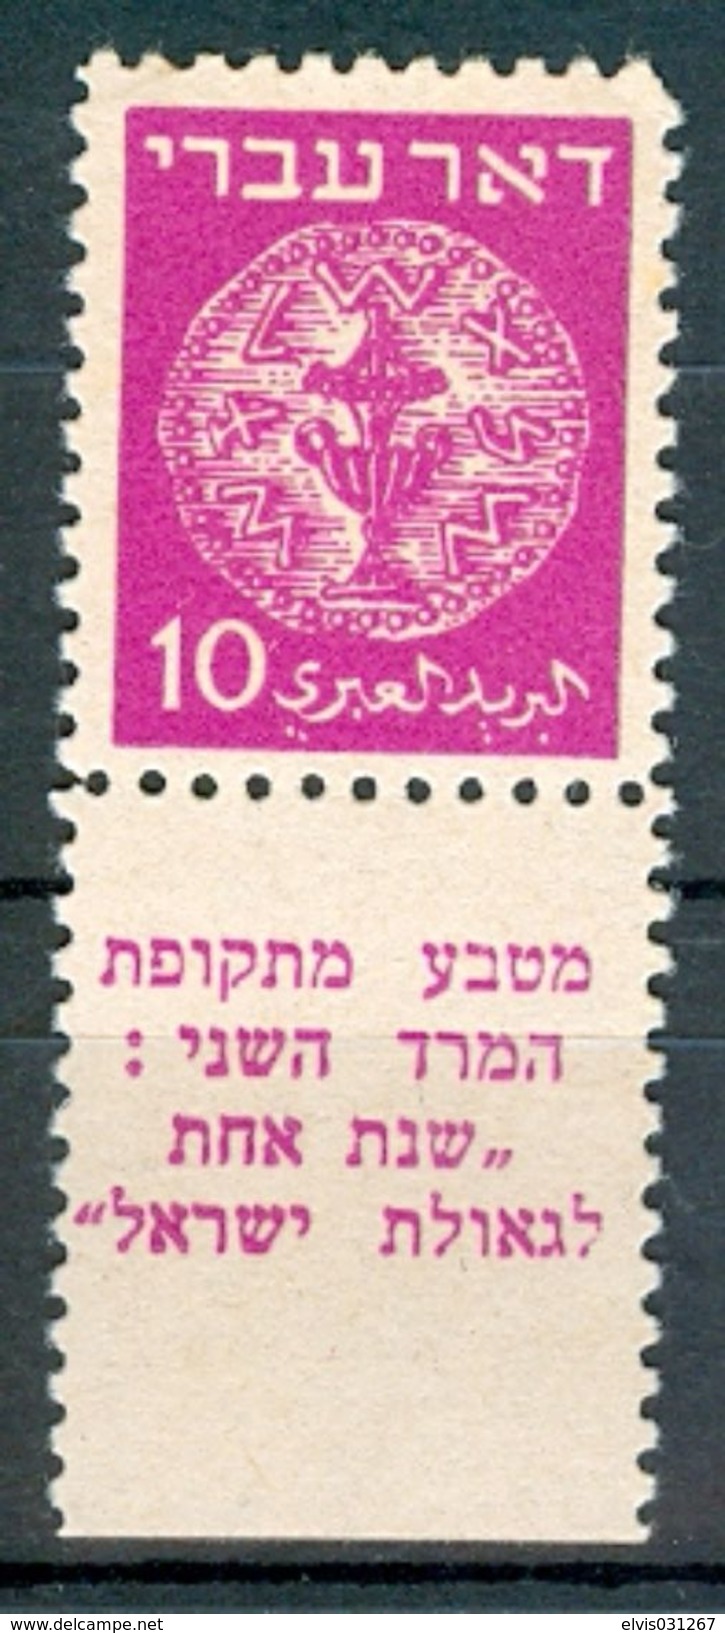 Israel - 1948, Michel/Philex No. : 3, WRONG TAB DESCRIPTION, Perf: 11/11 - NH - Gum Dist - ** - Full Tab - Imperforates, Proofs & Errors